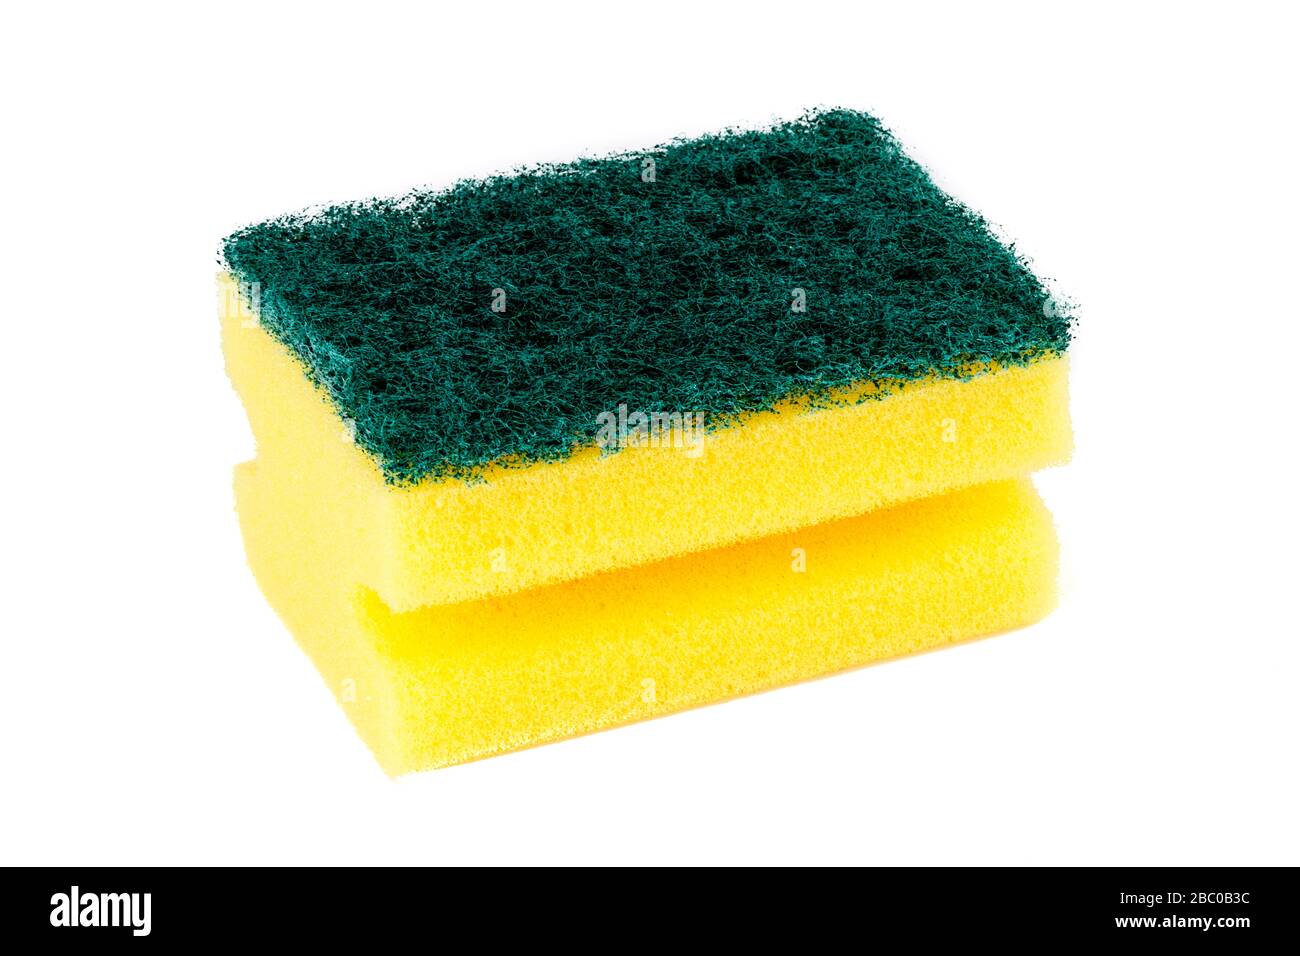 https://c8.alamy.com/comp/2BC0B3C/scouring-pad-sponge-scouring-pad-sponge-scourer-washing-up-scourer-dish-scourer-dish-sponge-scrubber-sponge-scrubber-cleaner-washing-up-2BC0B3C.jpg